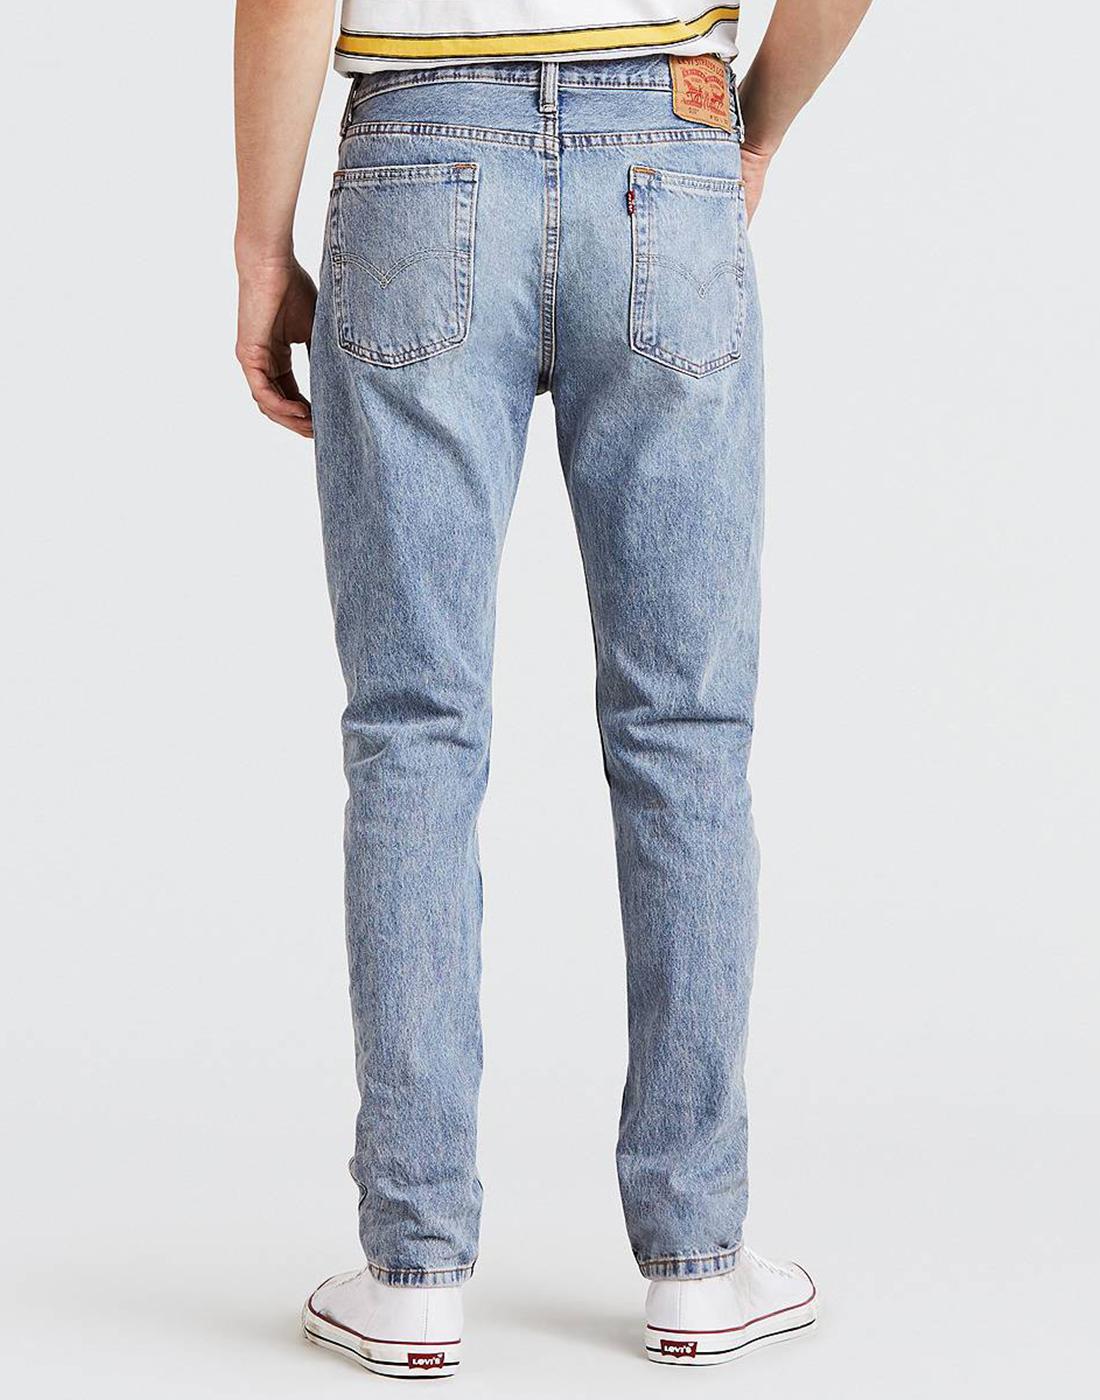 levi's 510 stretch jeans